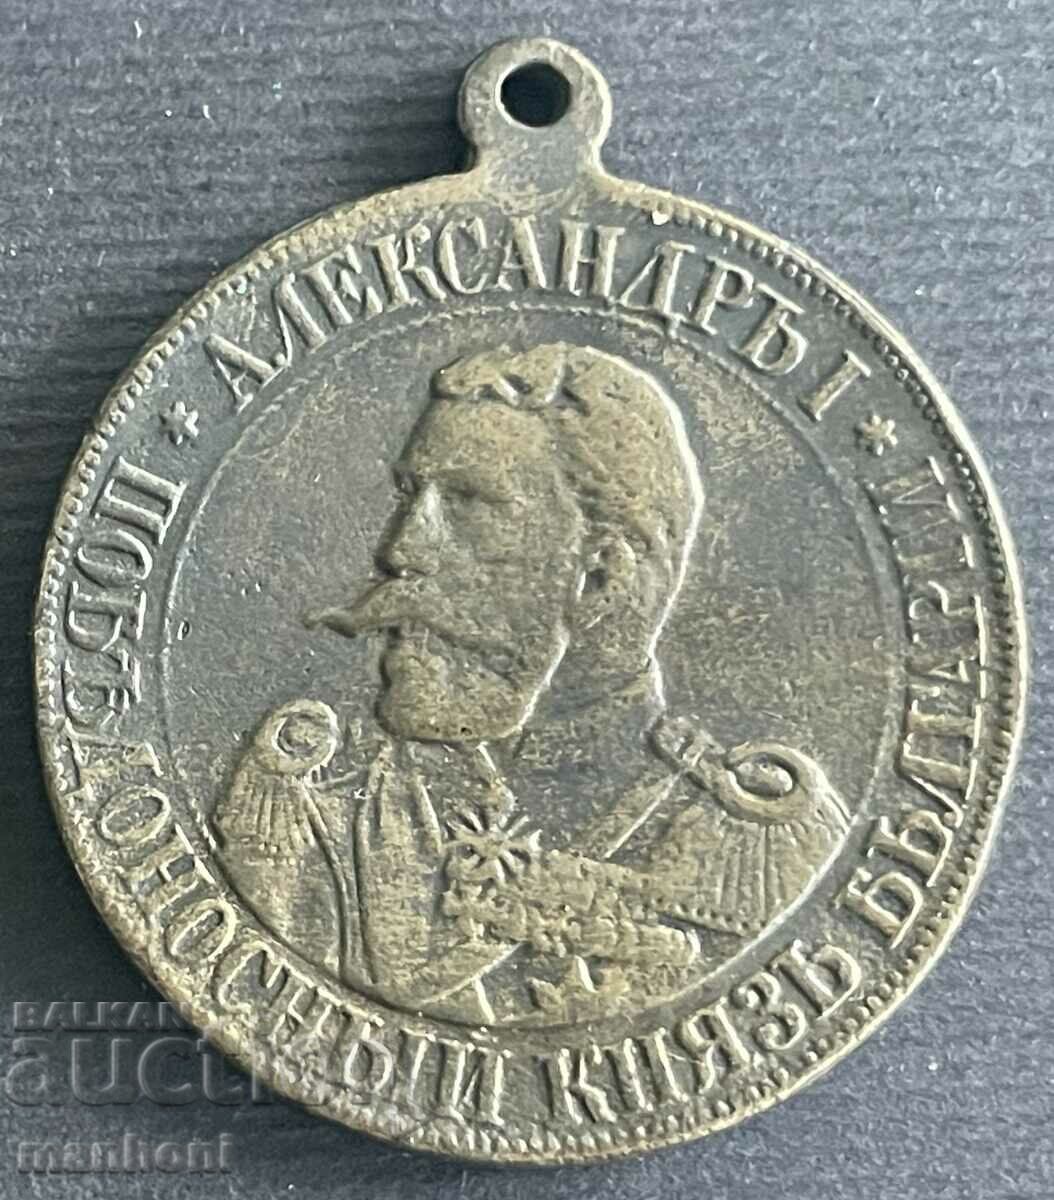 5544 Principality of Bulgaria medal Prince Battenberg 1886.